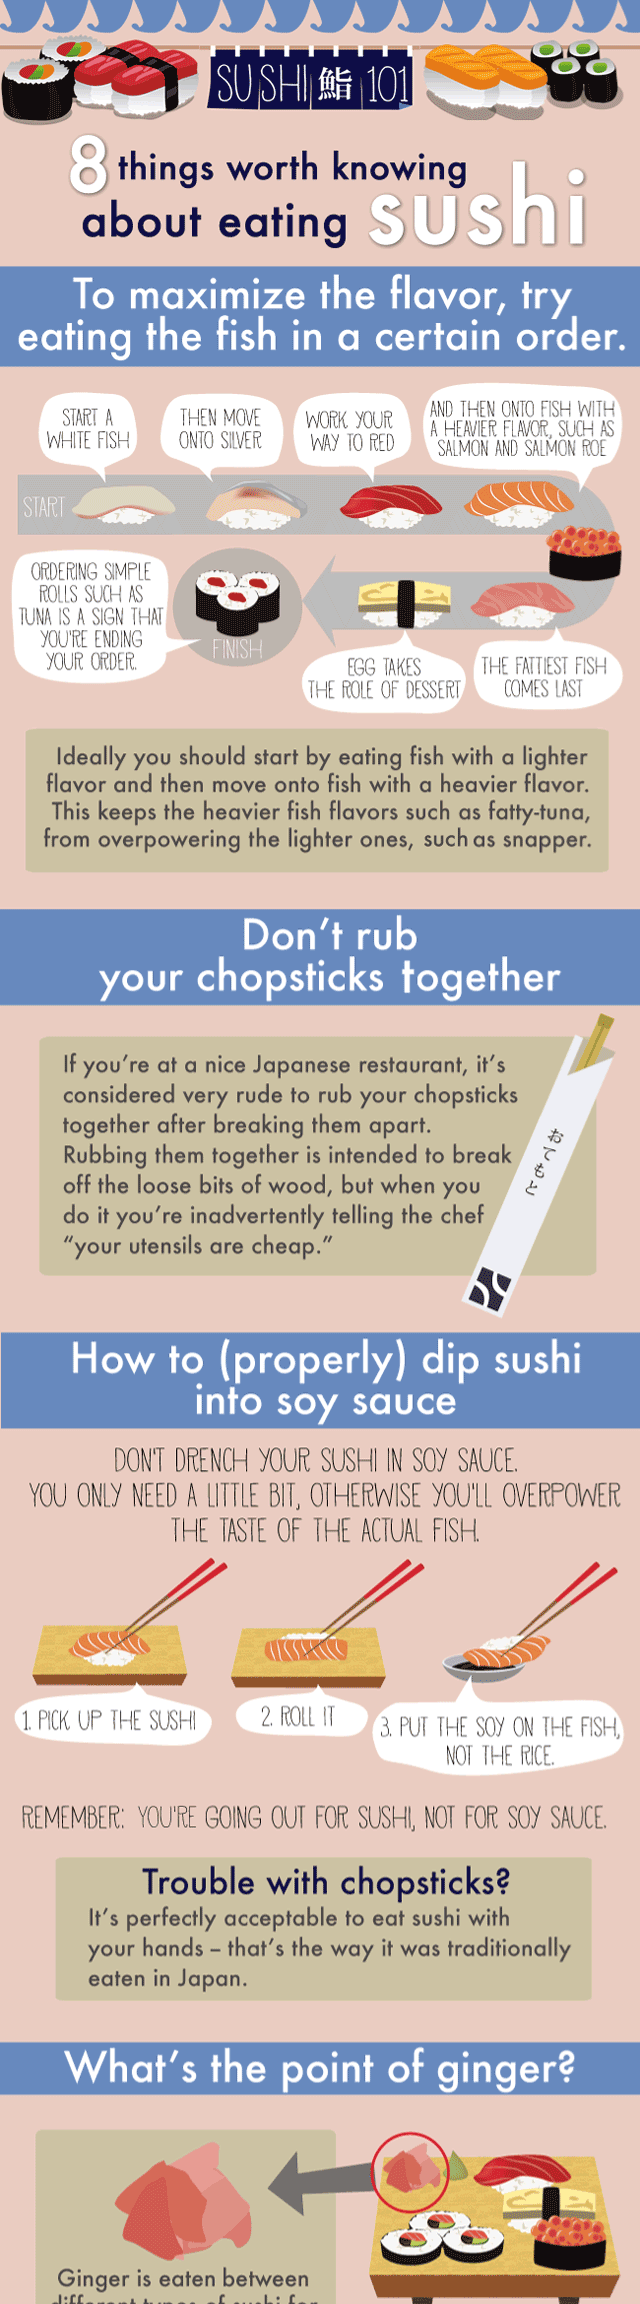 eating Sushi